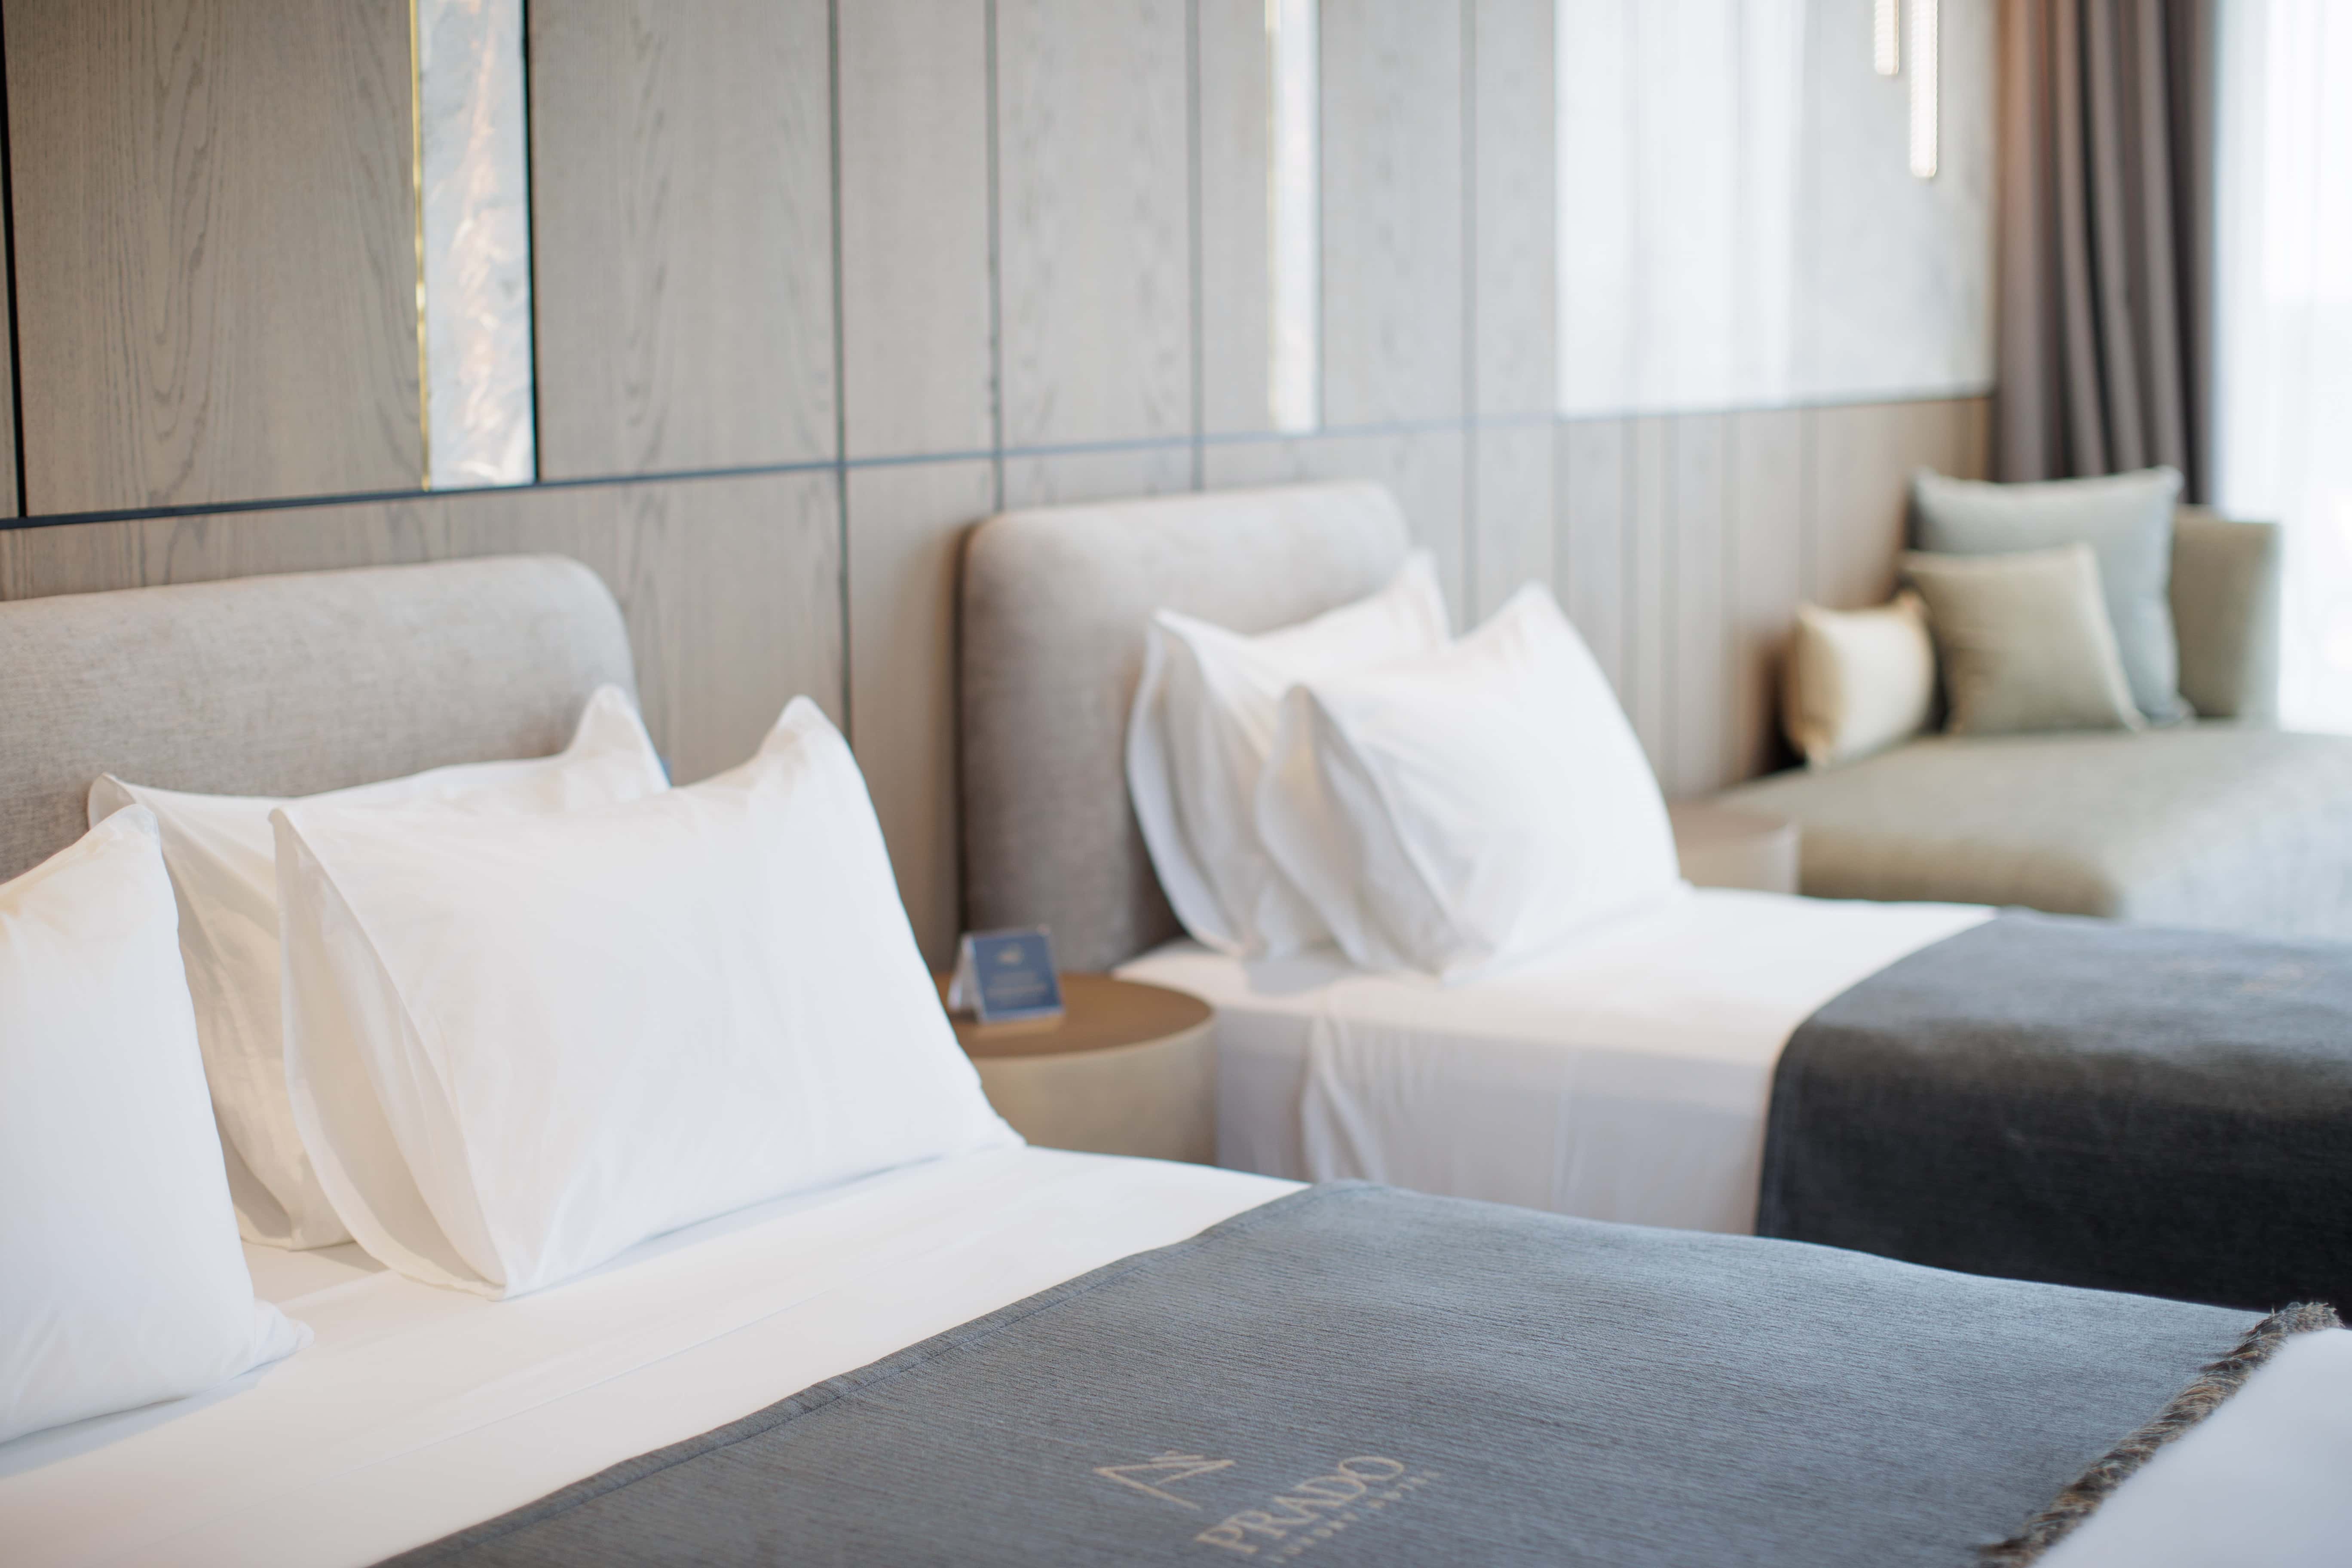 prado_luxury_hotel_room_standard_family_bed_pillows